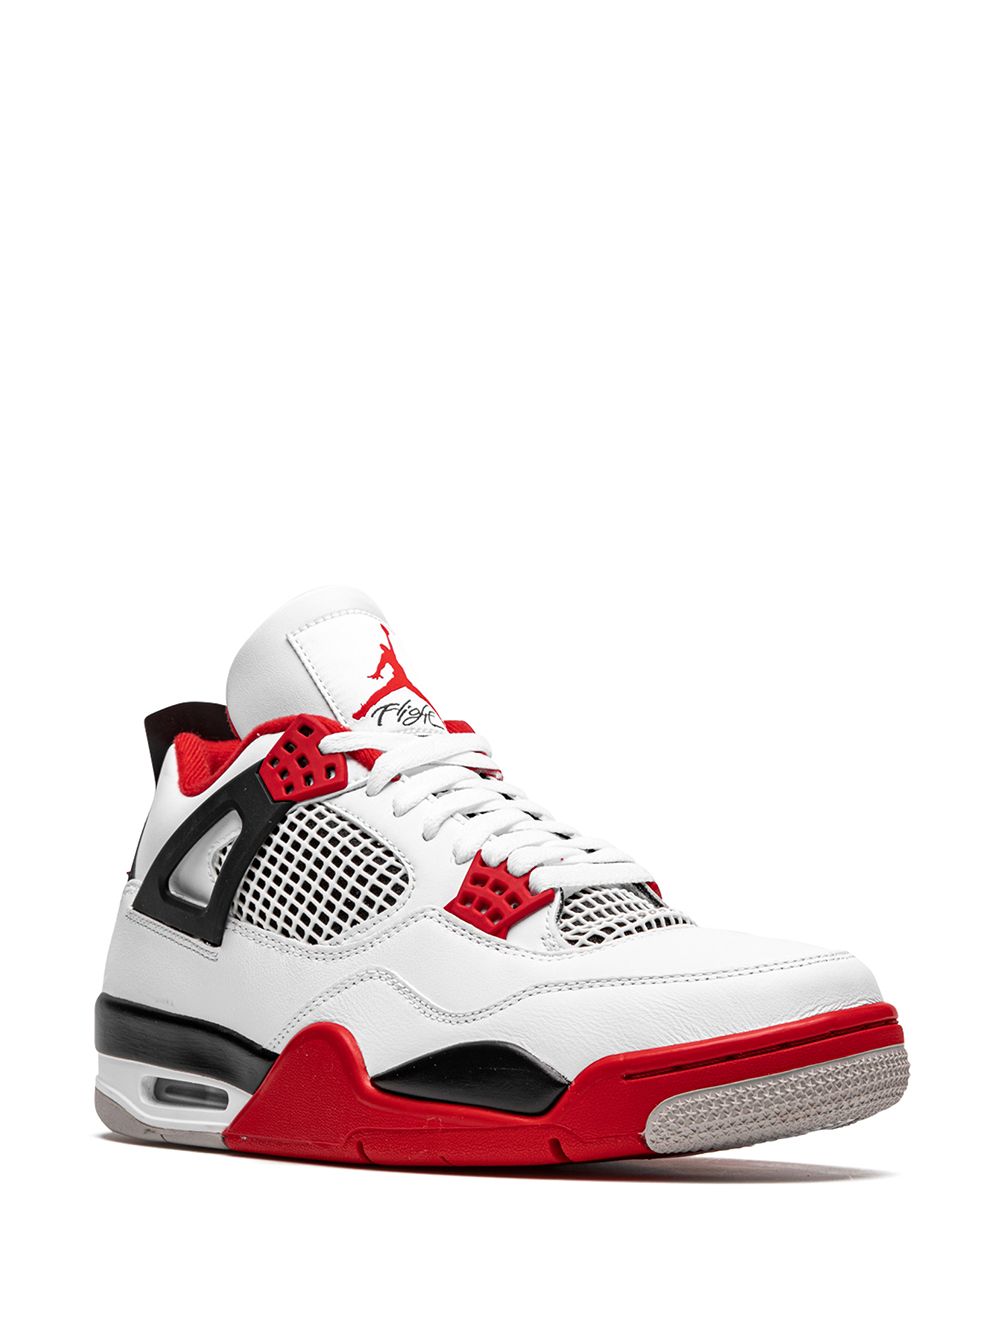 Air Jordan Retro 4 FIRE RED